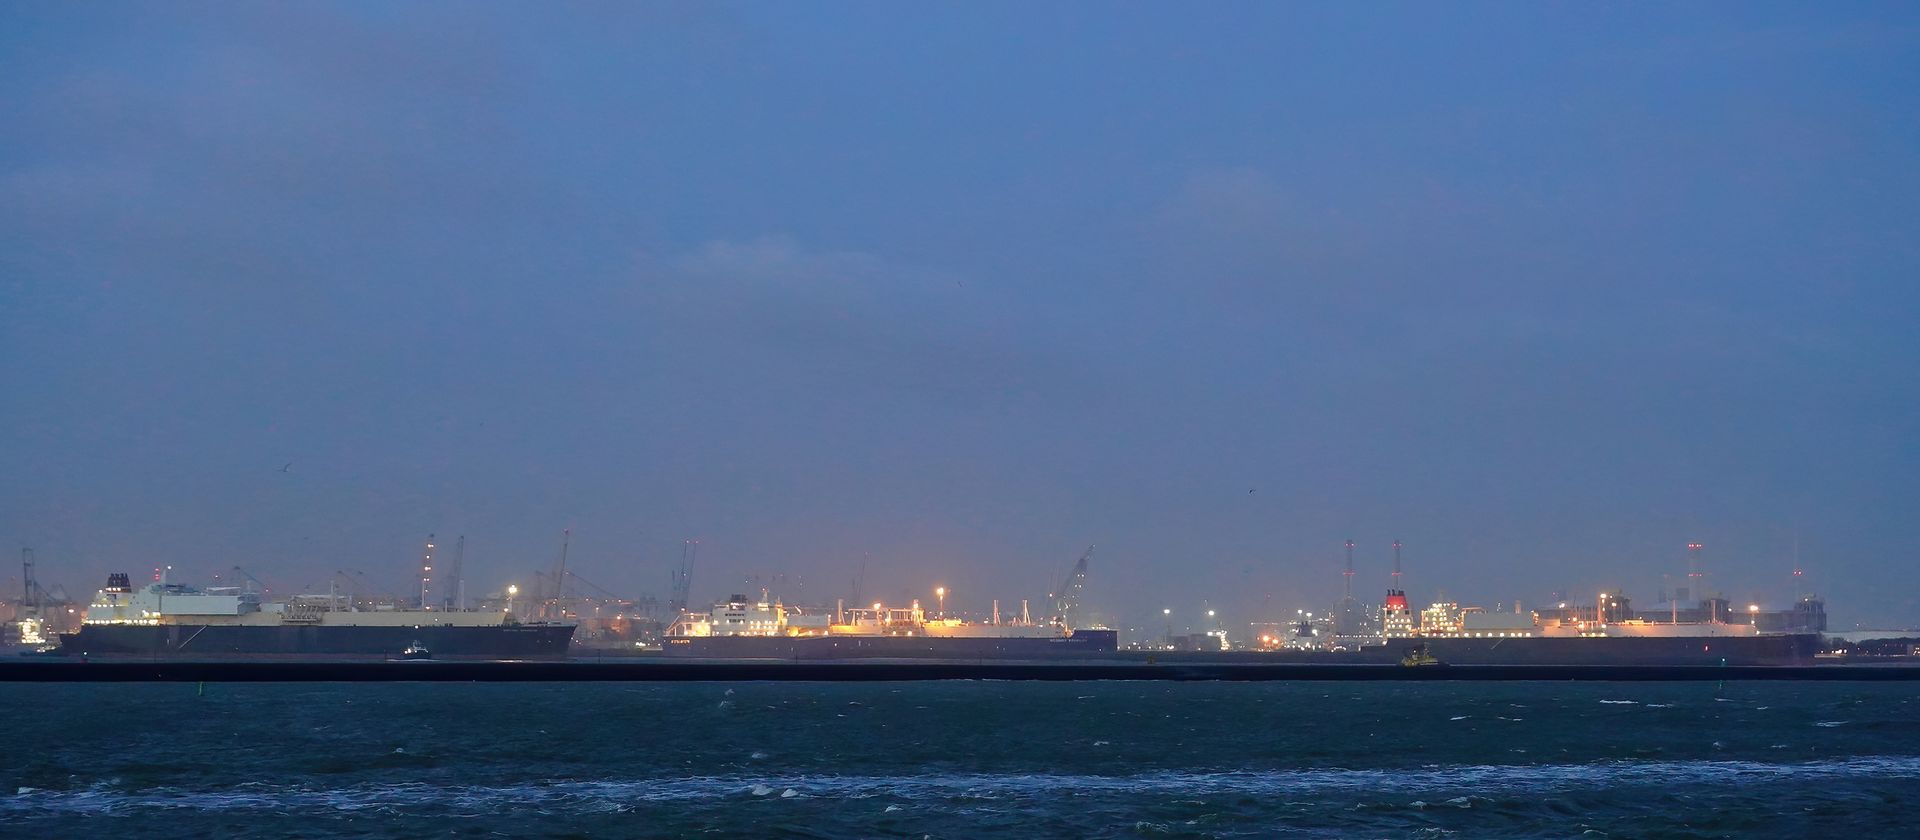 Drie LNG tankers op een rij in de Rotterdamse haven. (Foto Port of Rotterdam / Kees Torn)